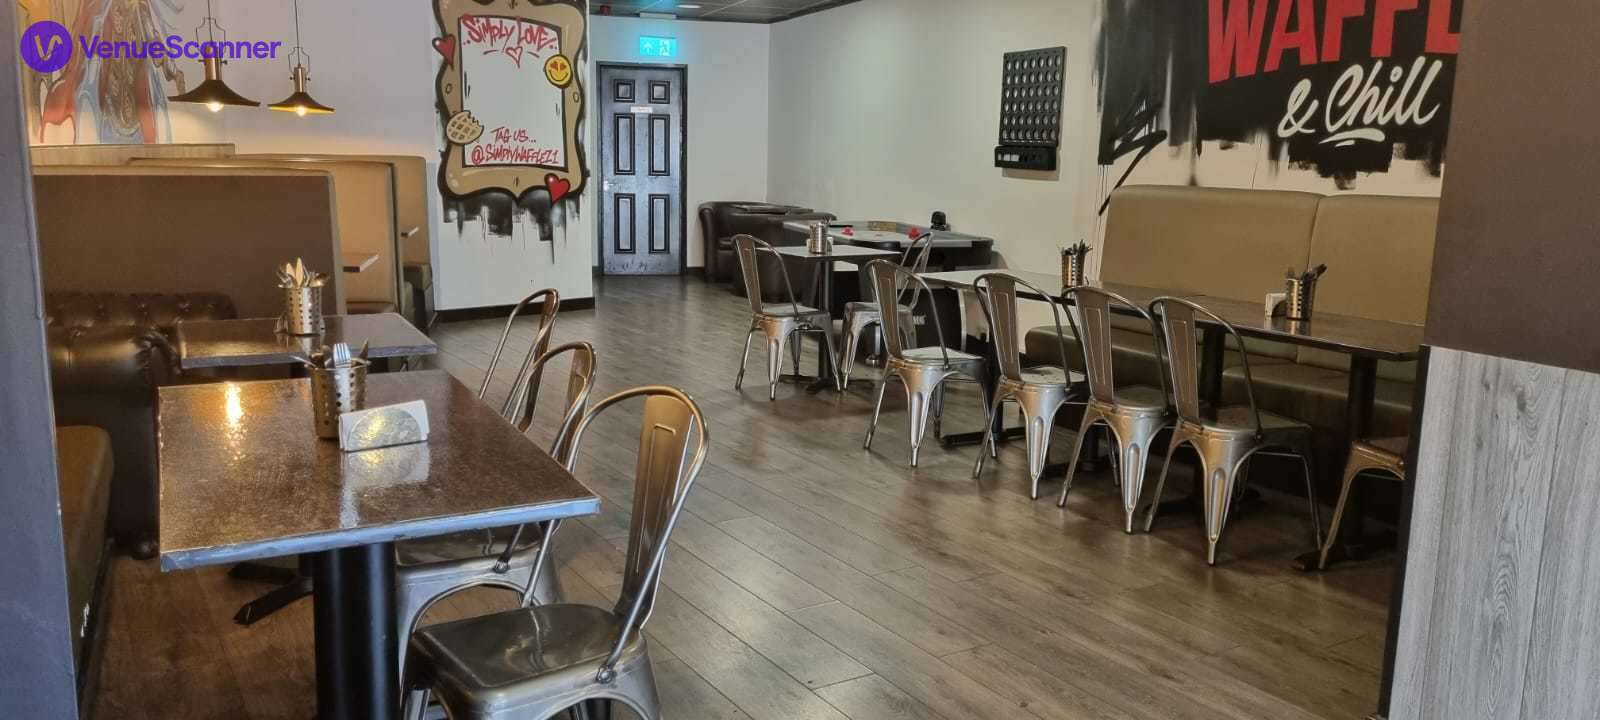 Hire Simply Wafflez Main Restaurant